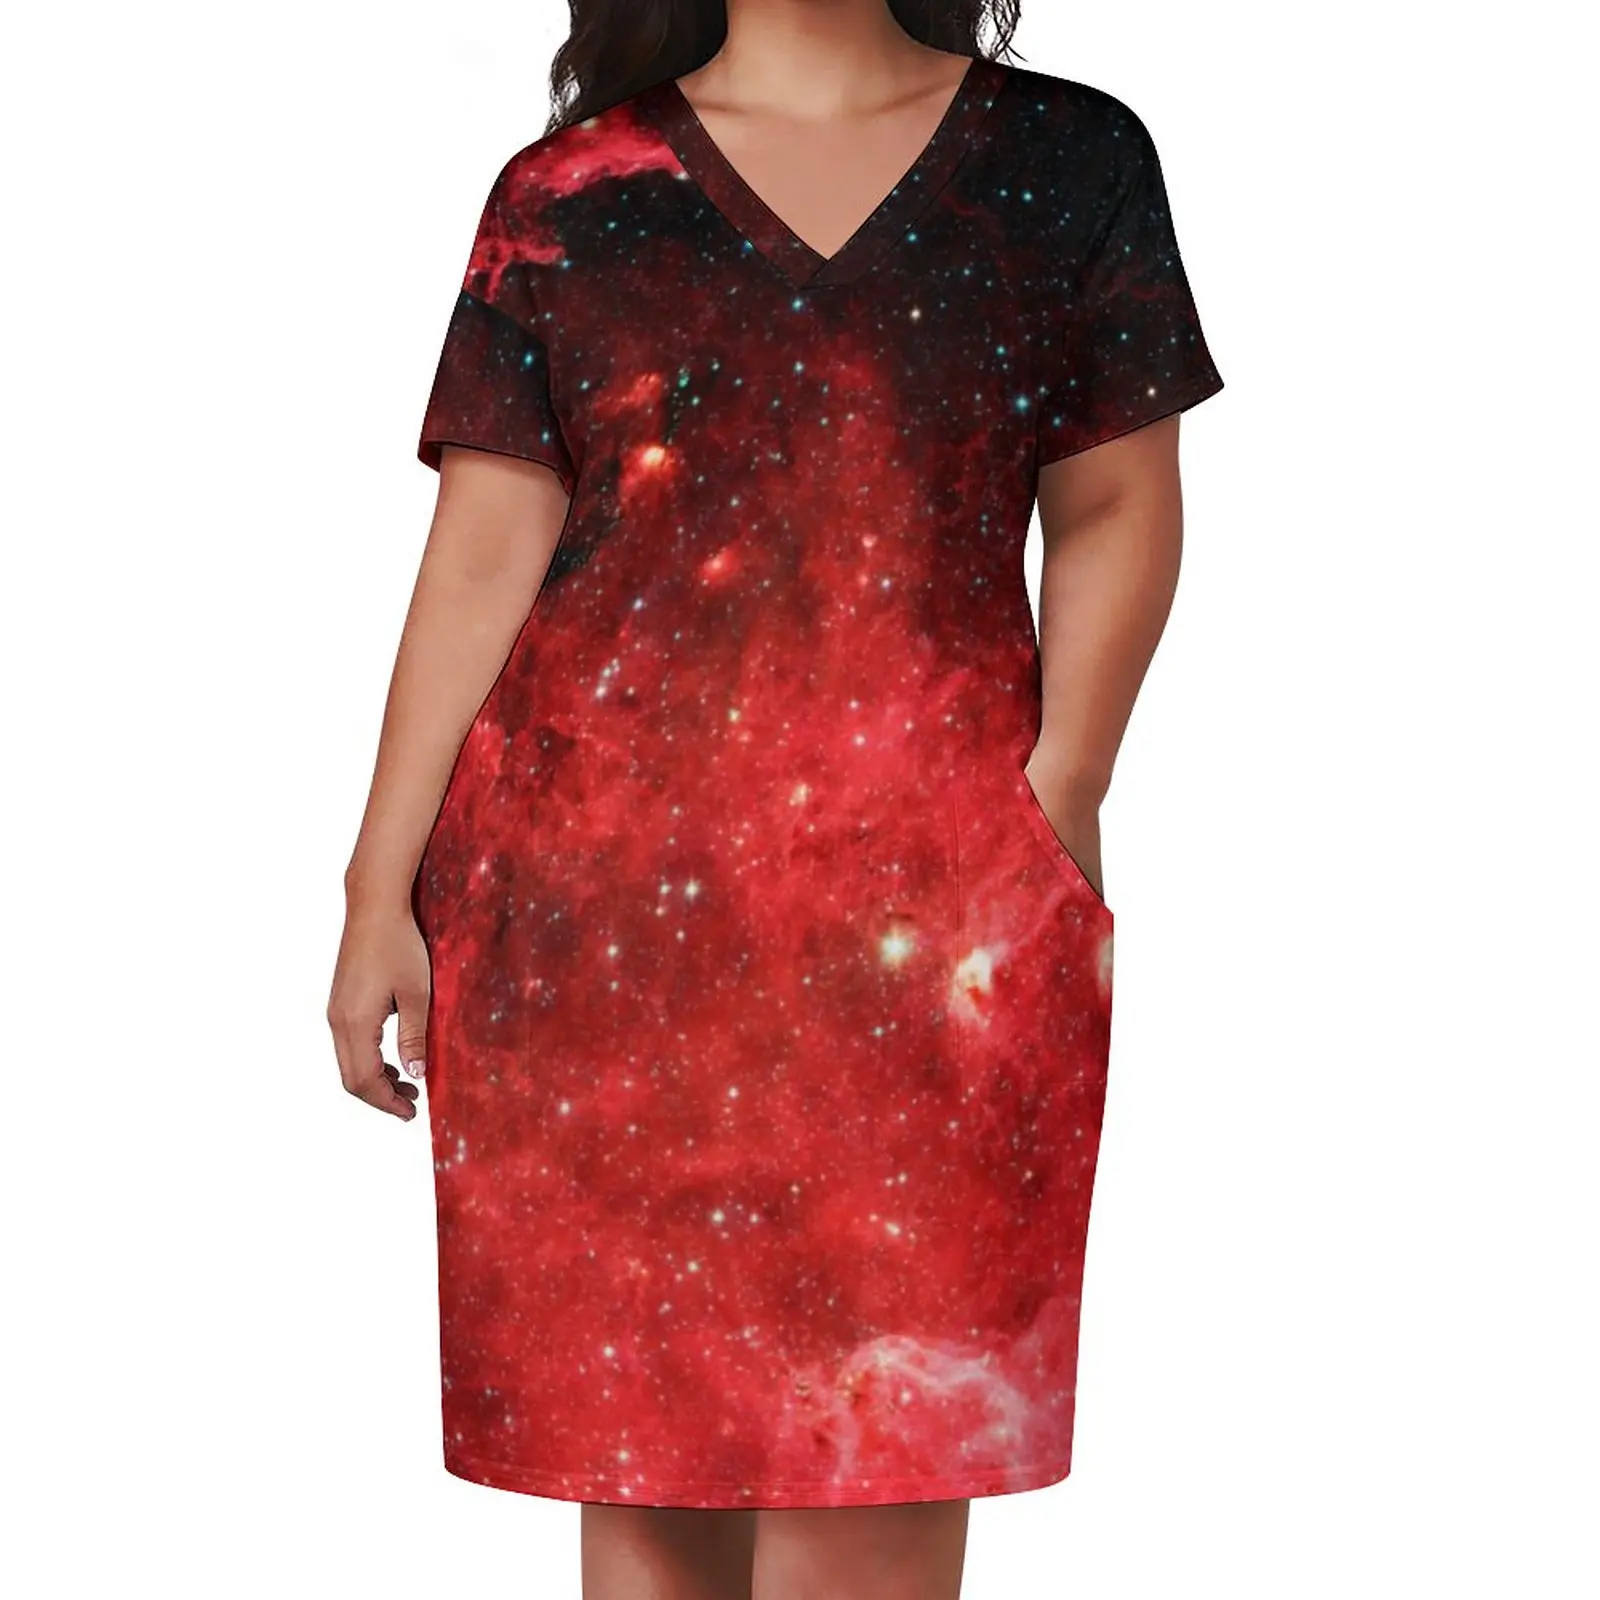 Red Galaxy Sky Dress Plus Size North America Nebula Street Style Casual Dress Female Holiday Short Sleeve Cute Dresses Gift Idea